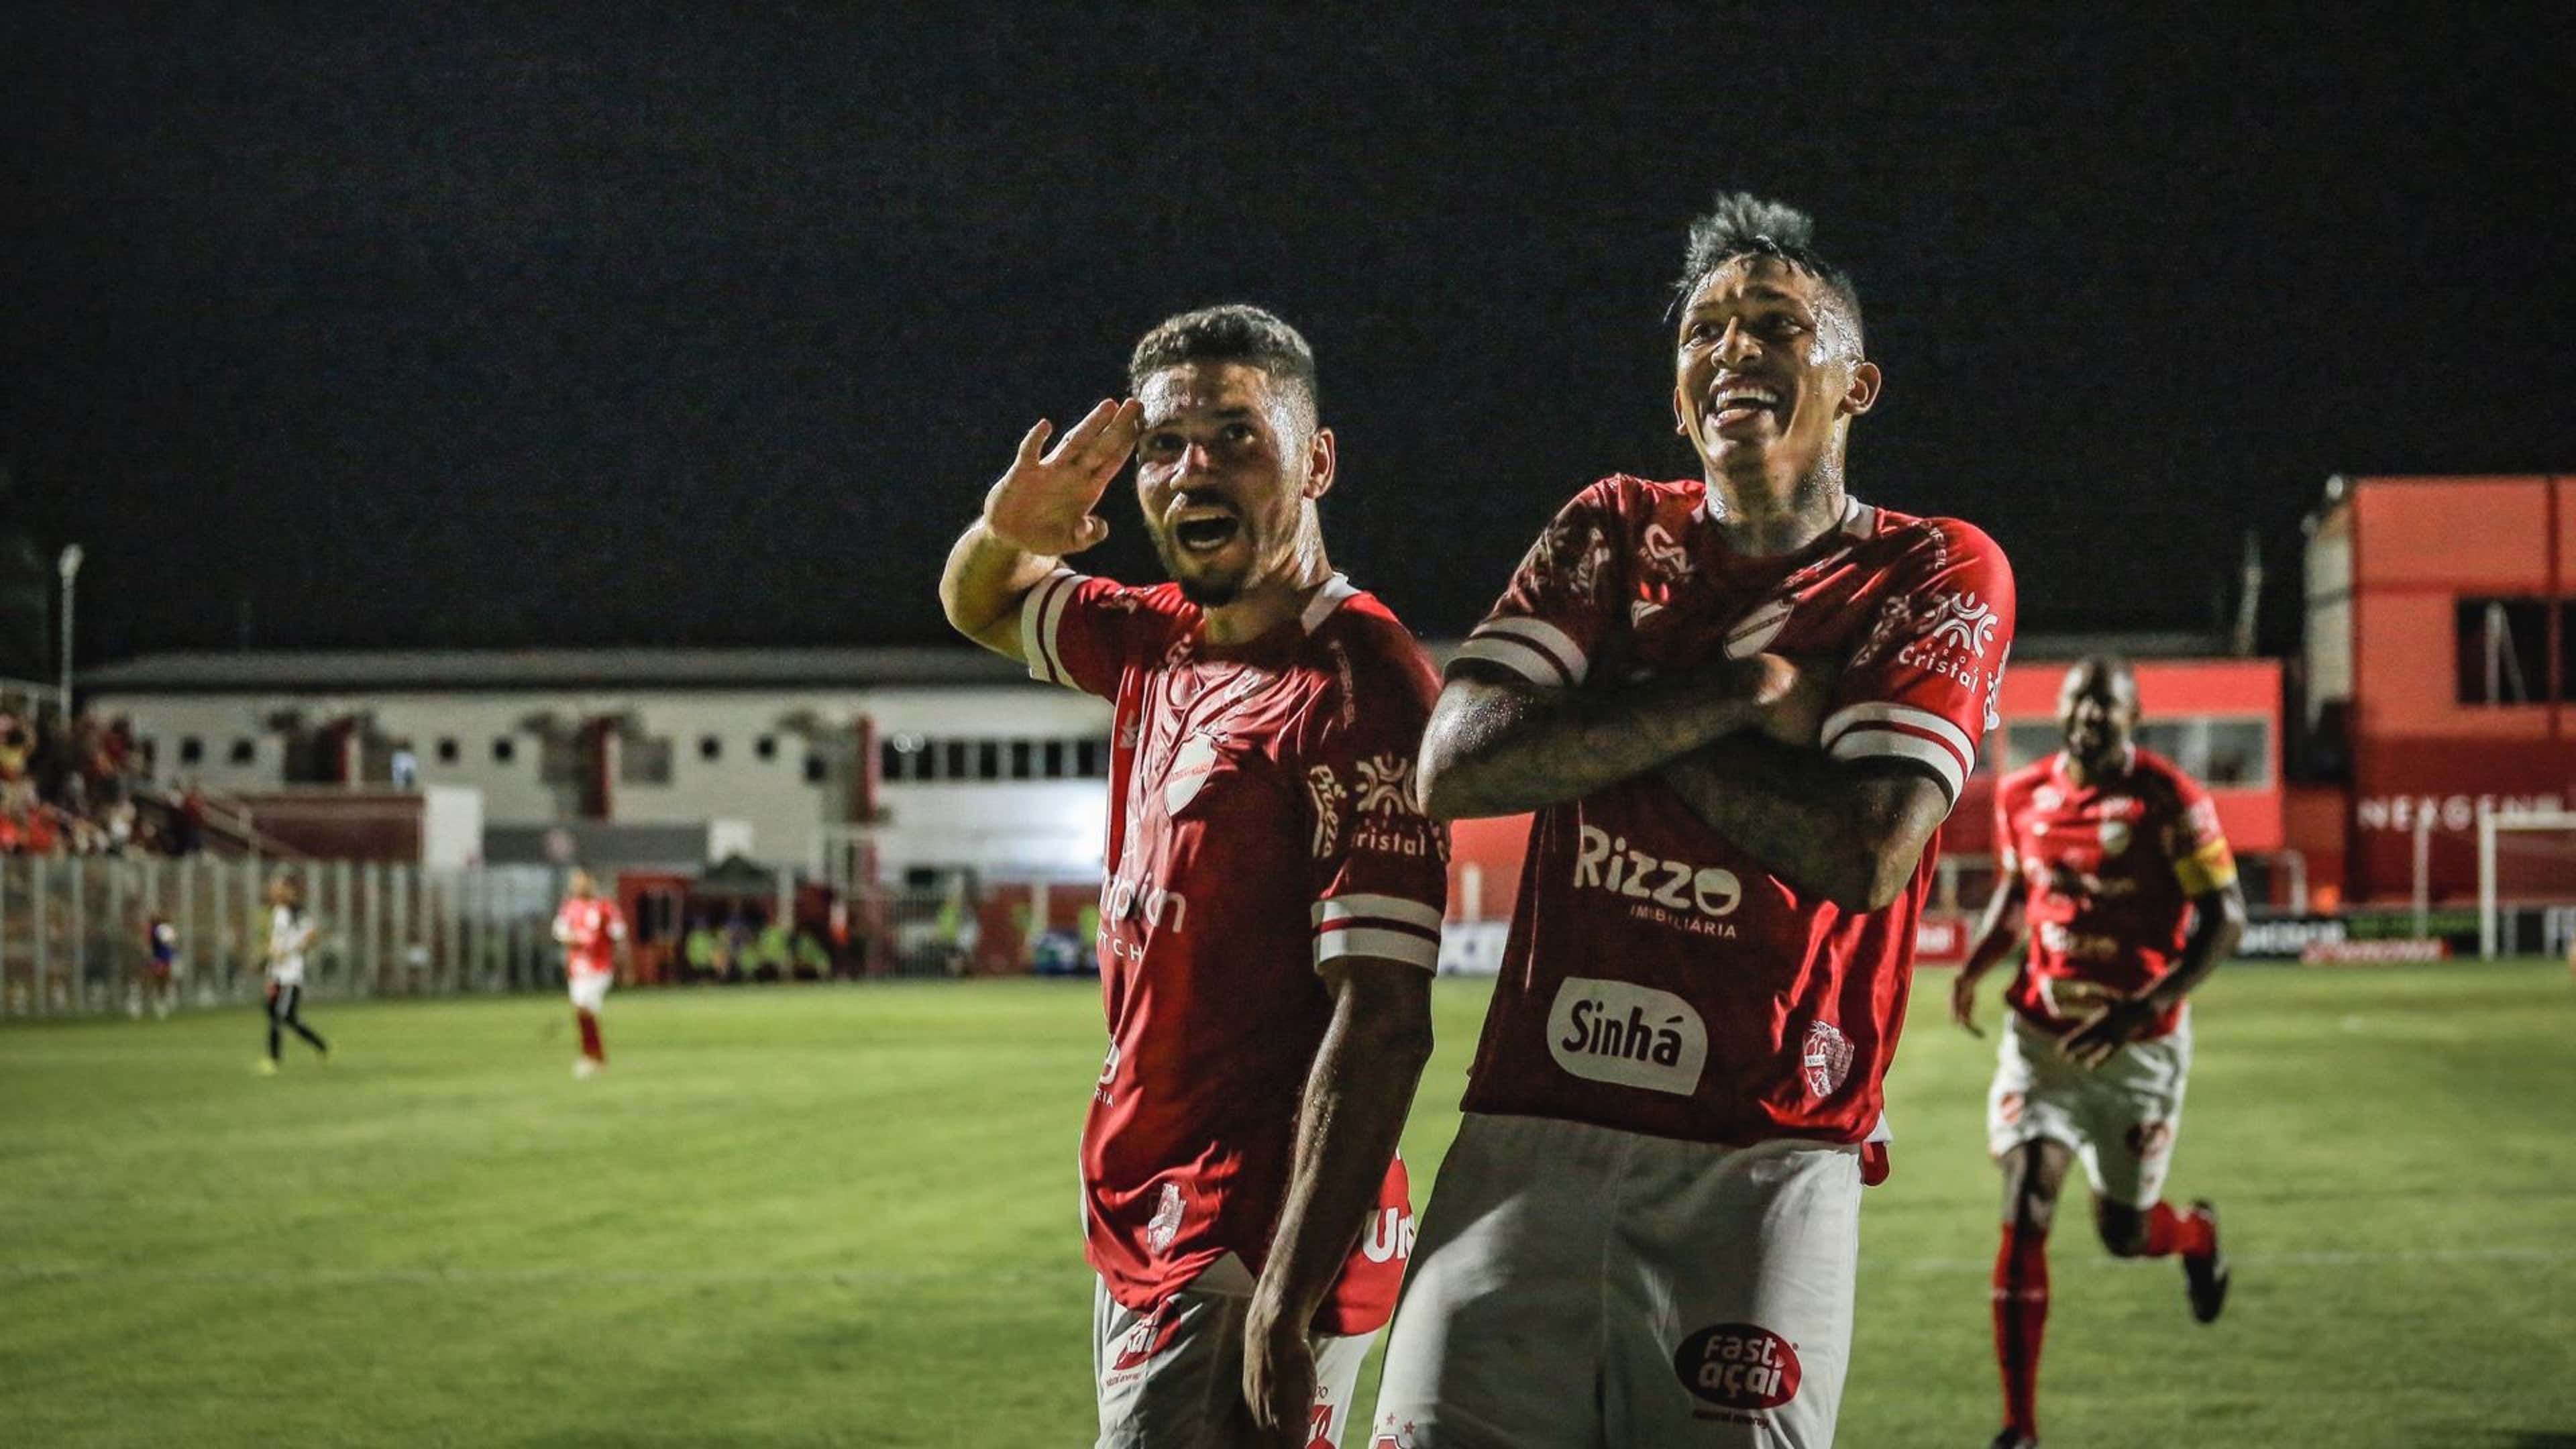 Fortaleza vs. América MG: A Clash of Two Brazilian Football Giants